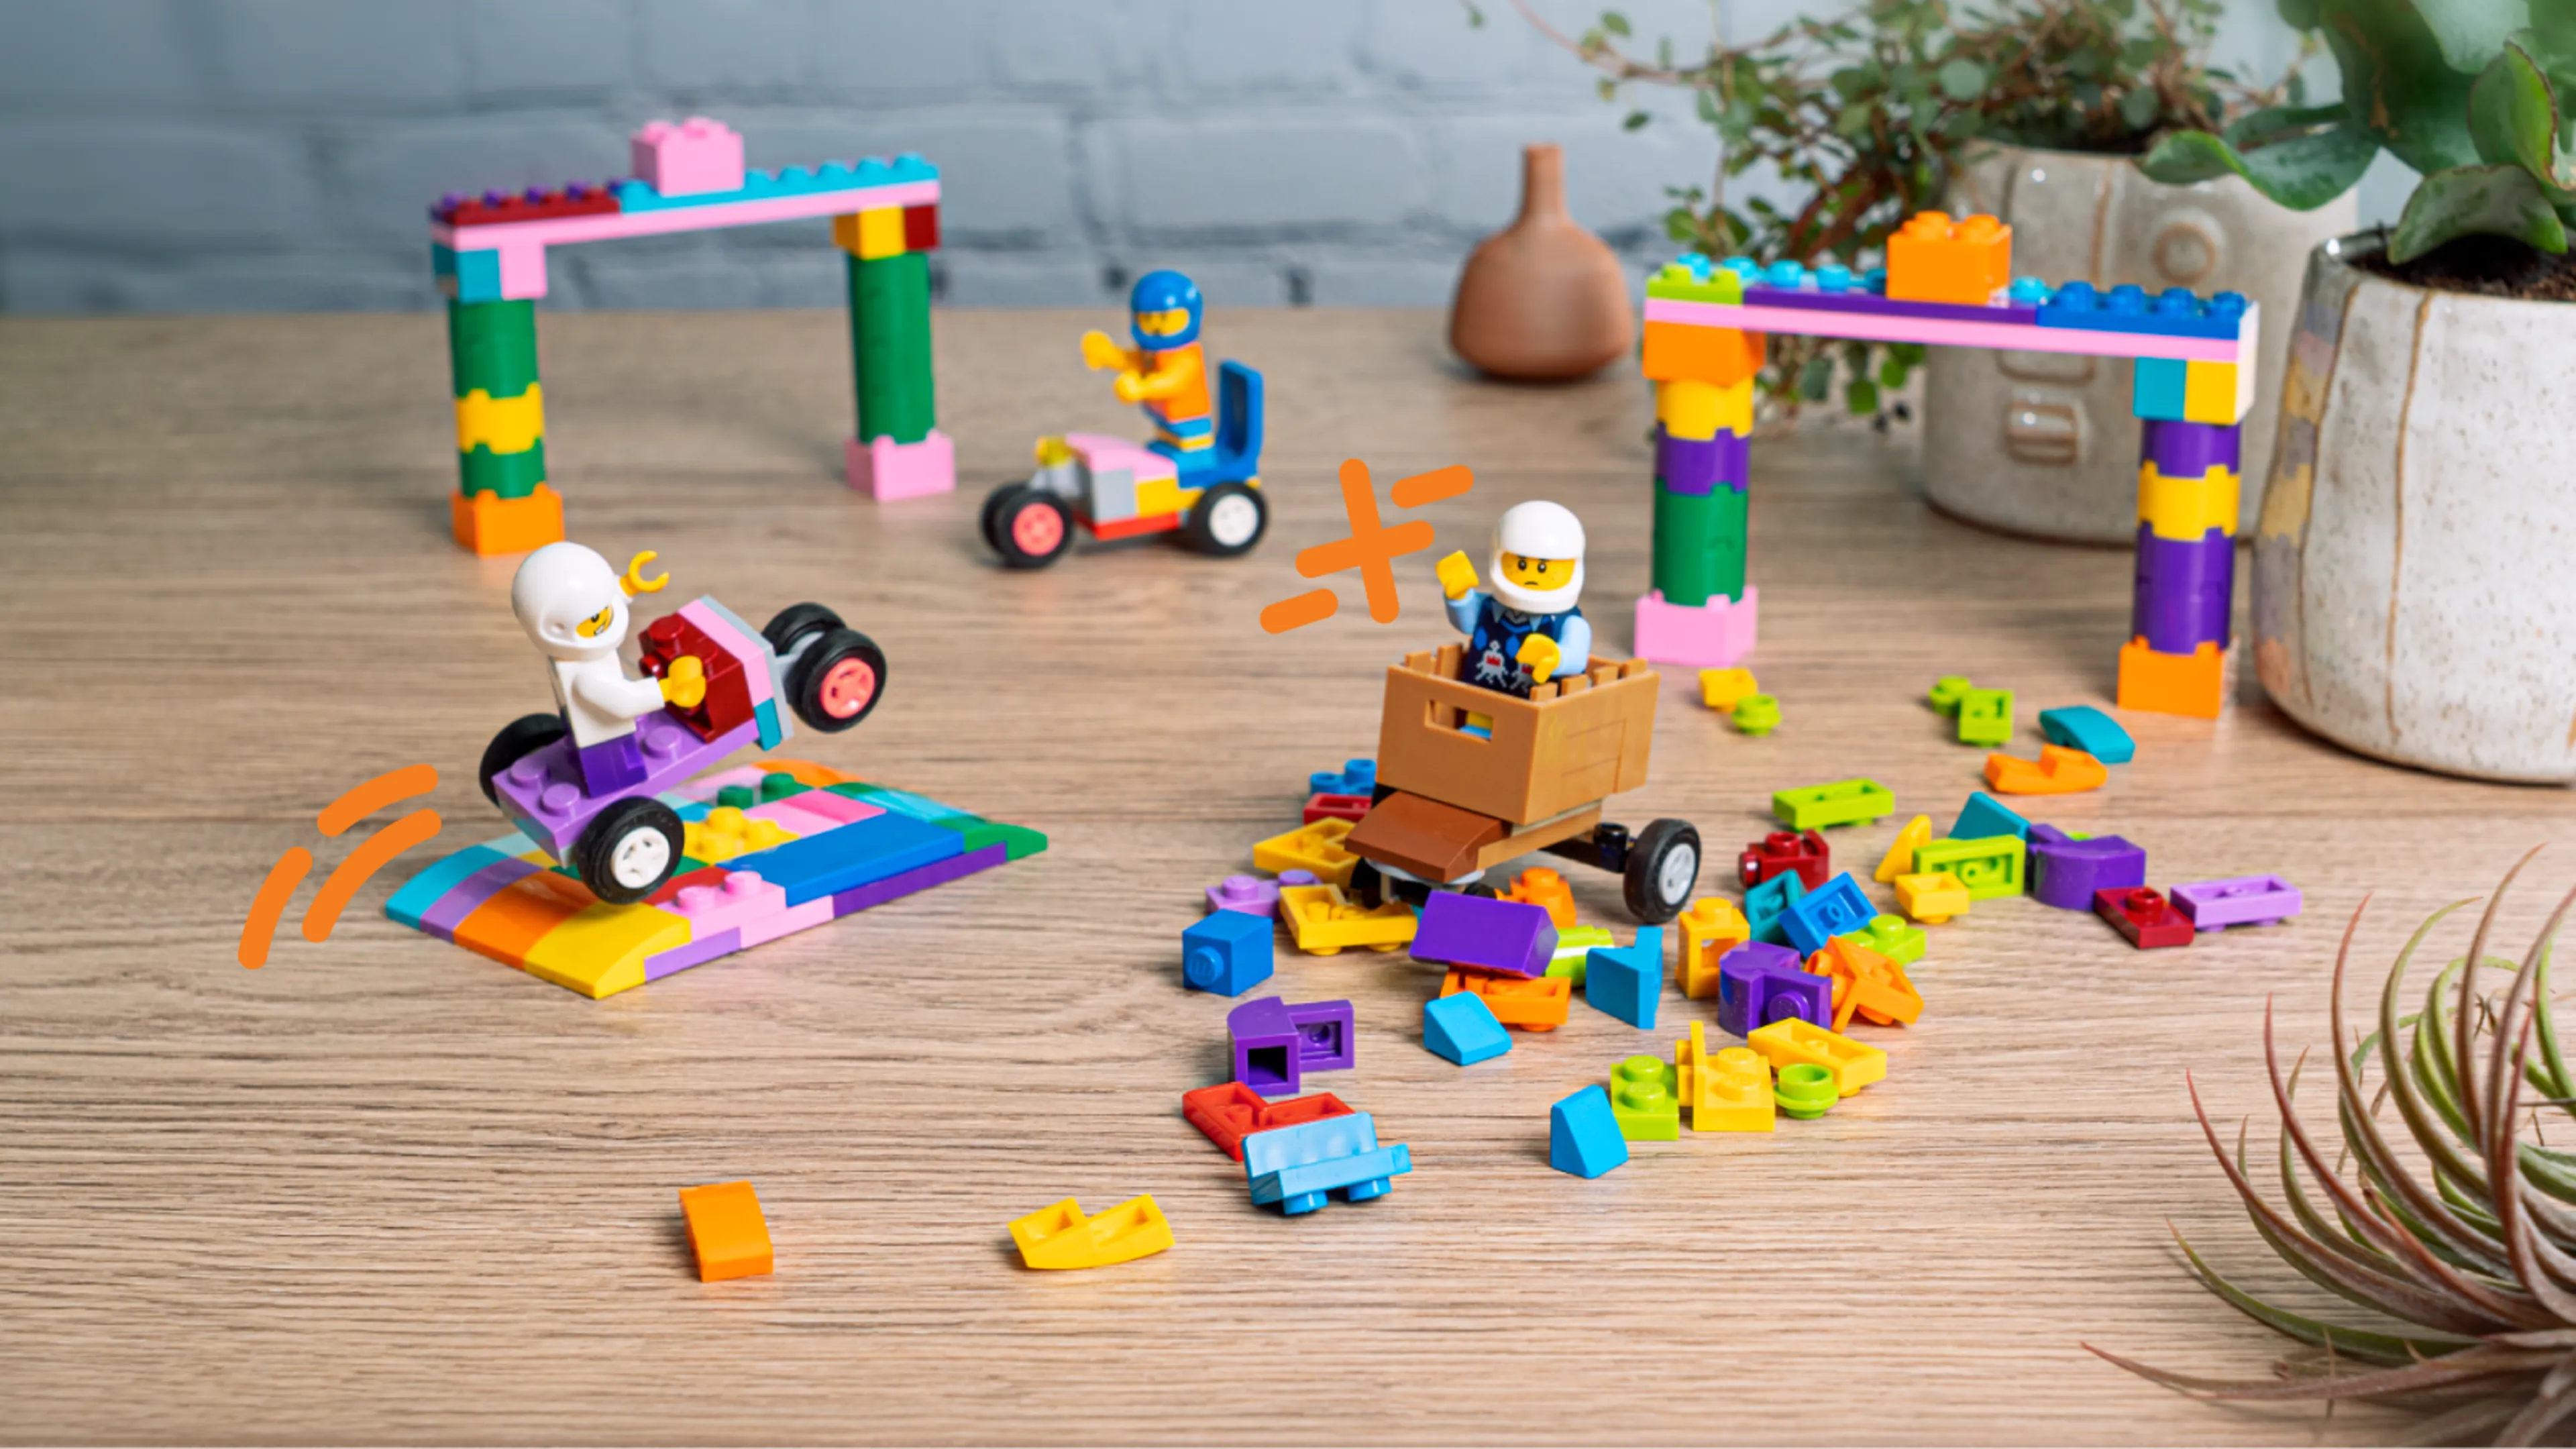 Minifigures, LEGO soapbox cars, gates and a pile of bricks